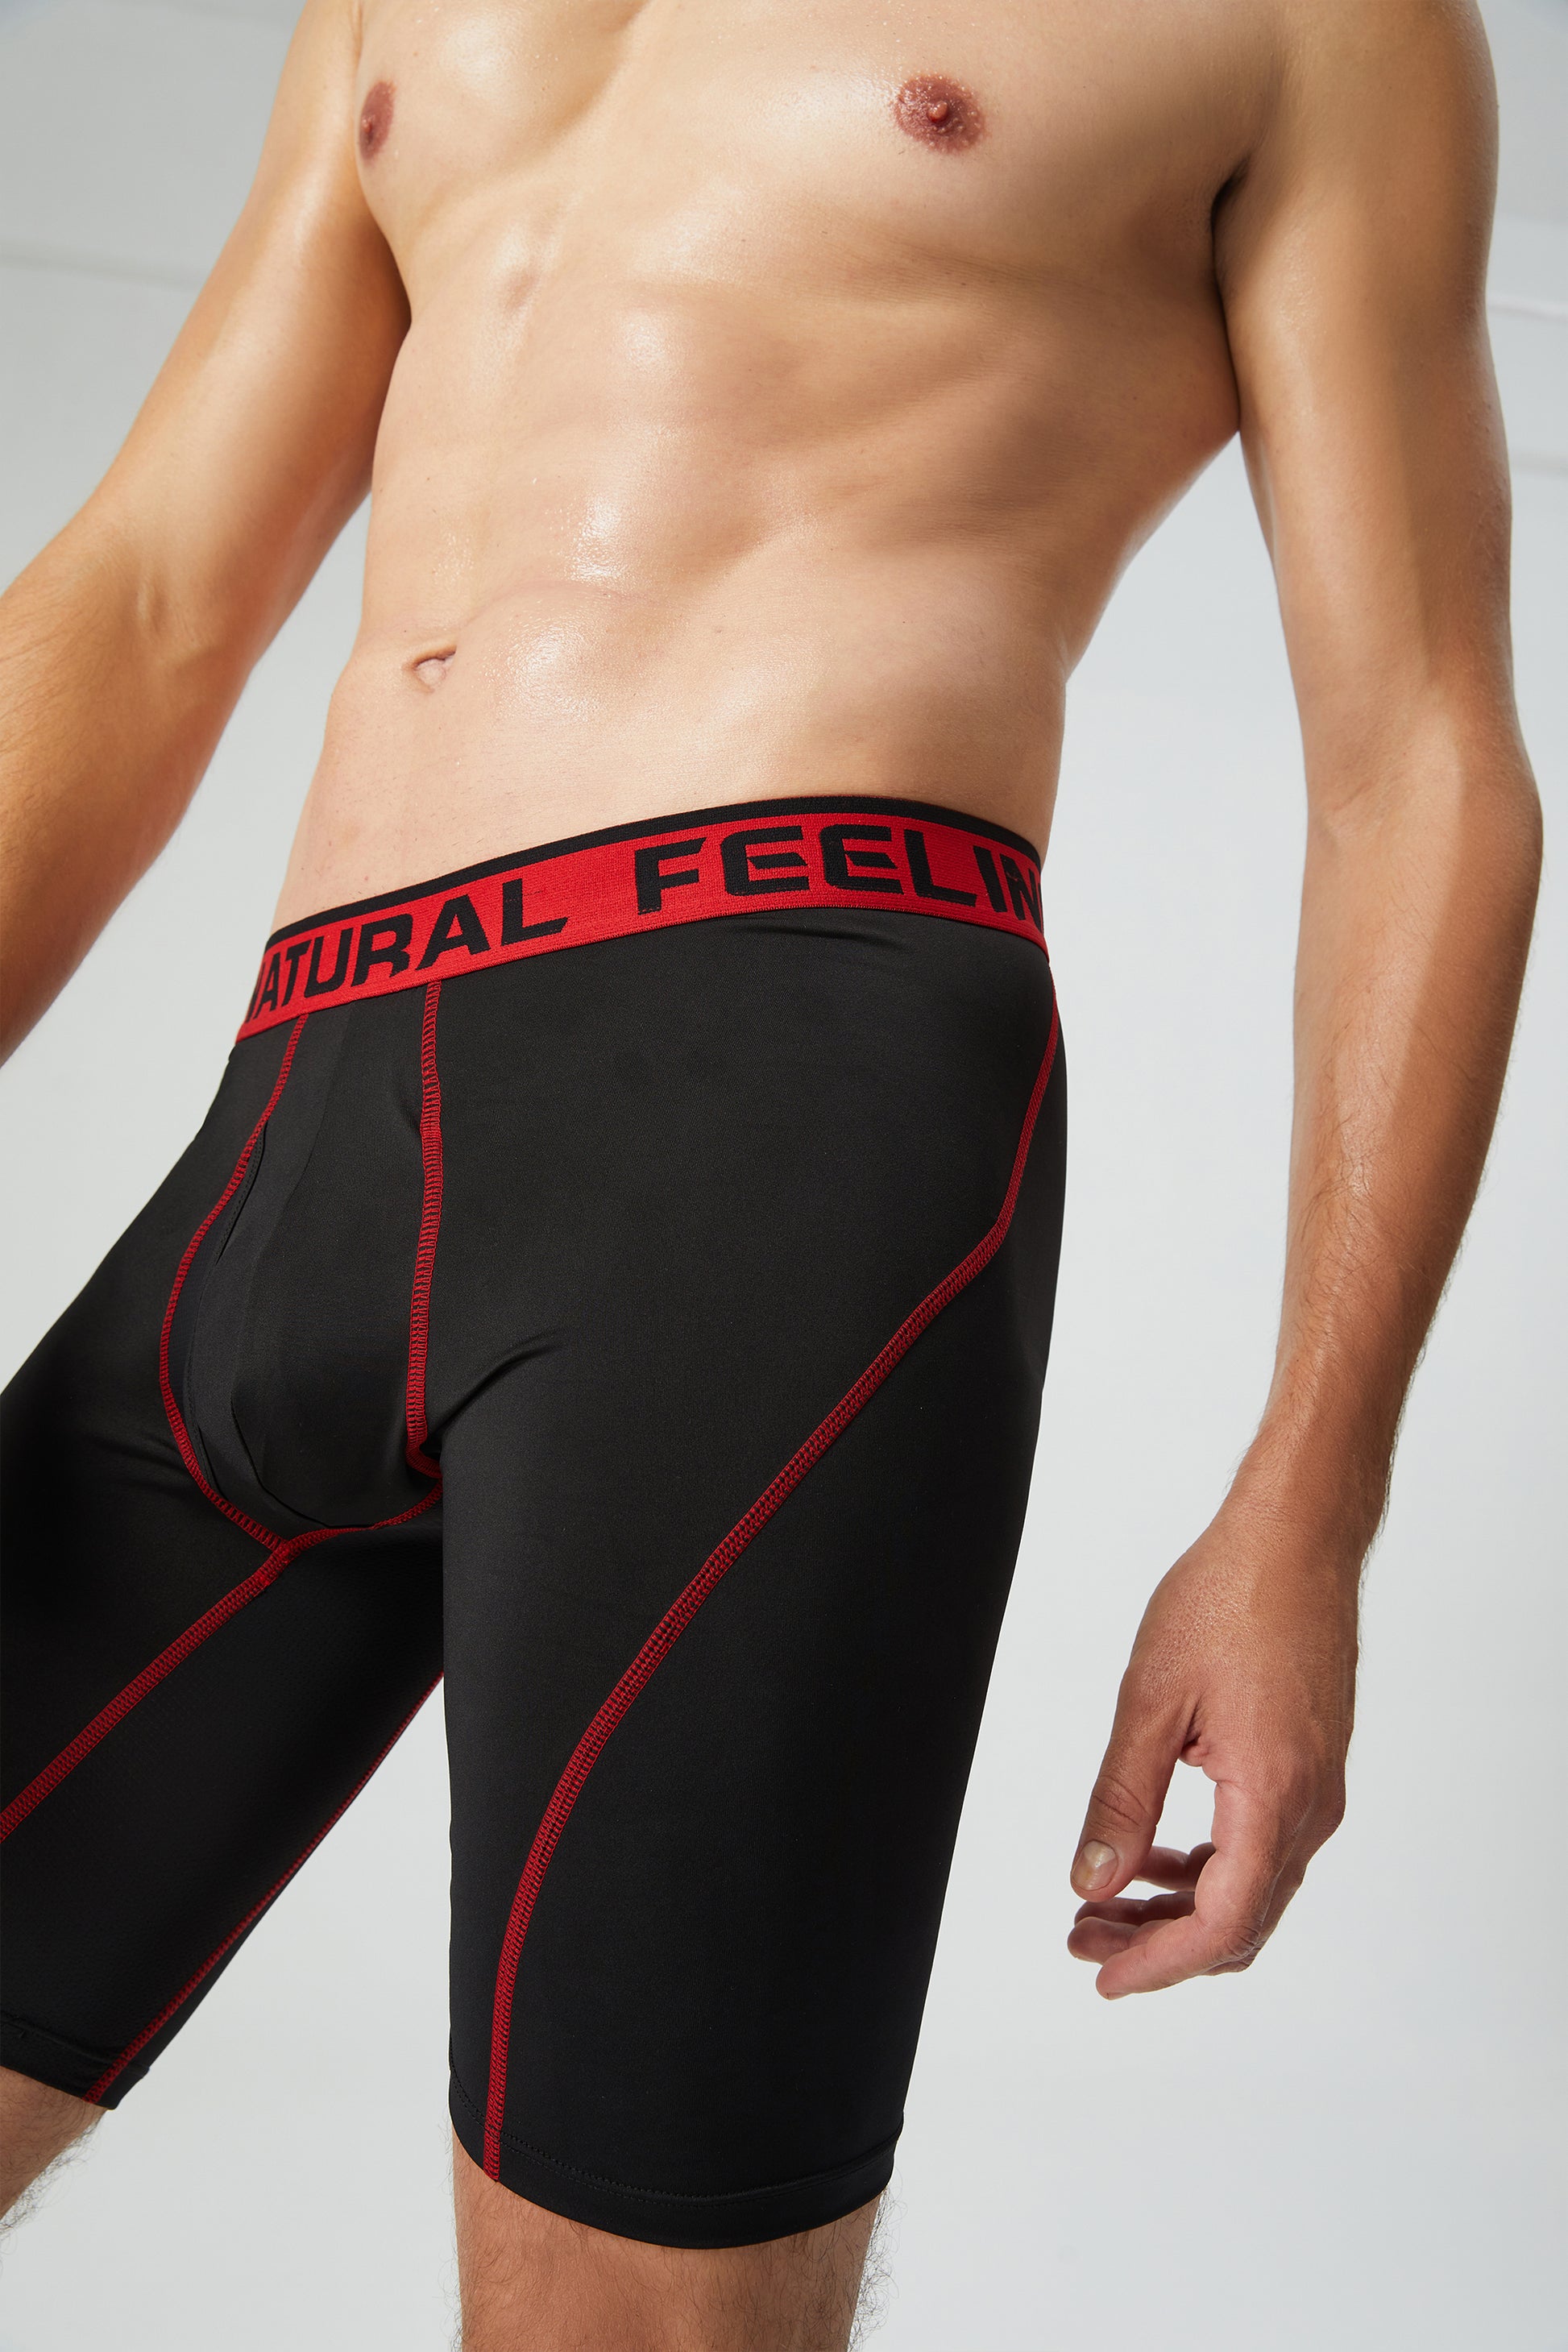 Natural Feelings Mens Underwear Boxer Briefs Long Leg 9 Inch Performance  Boxer Briefs for Men